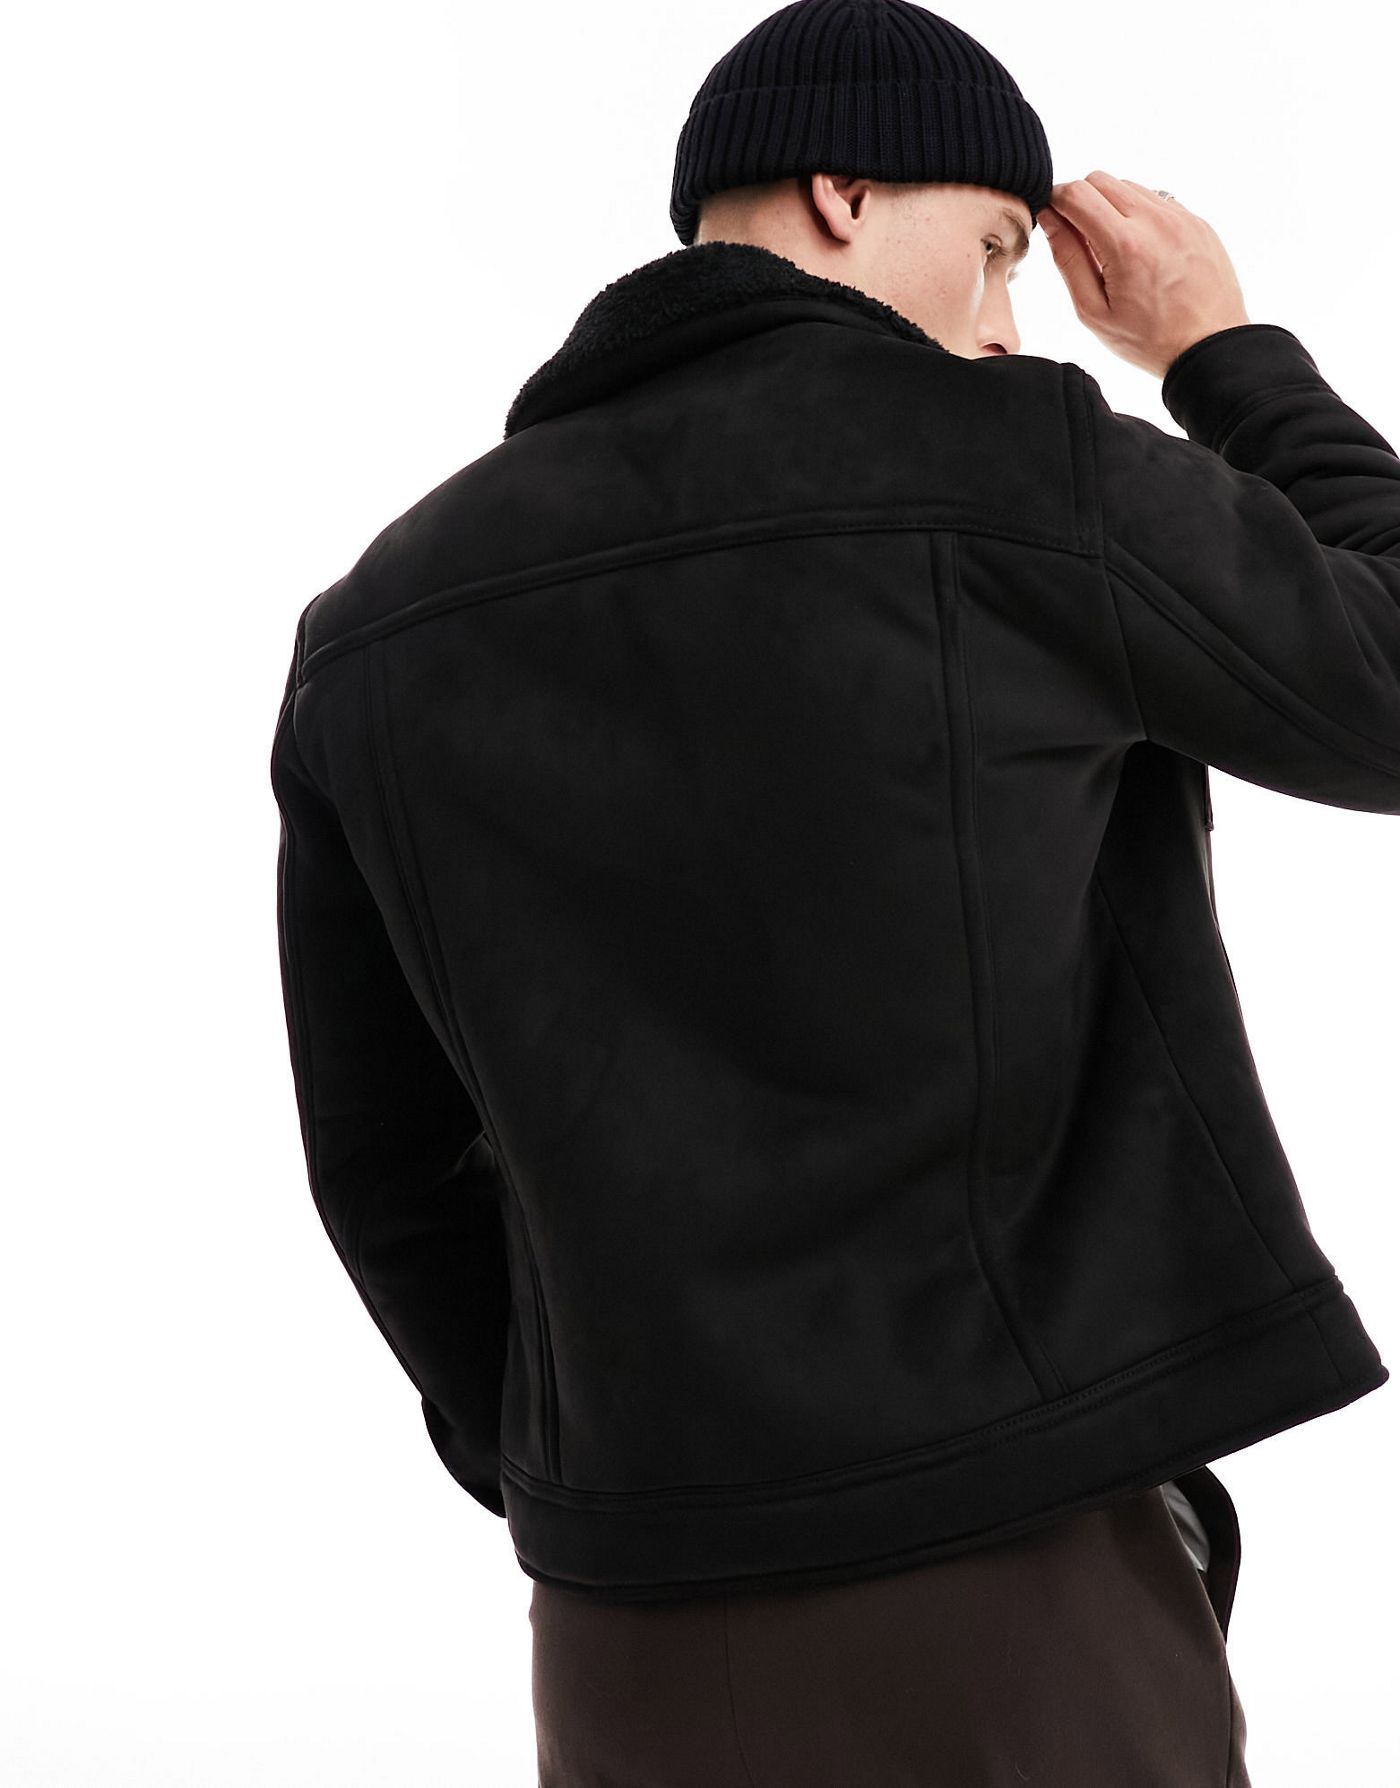 River Island shearling jacket in black